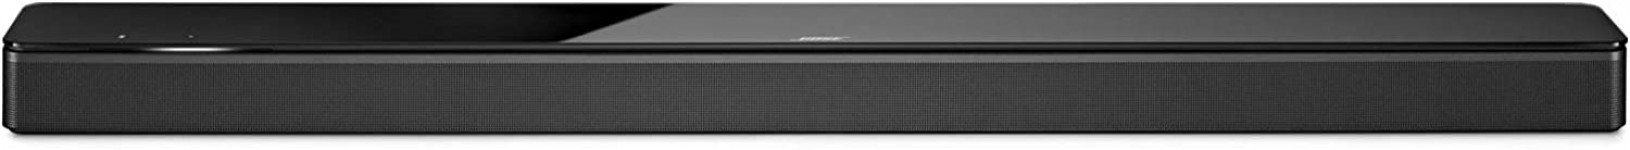 Bose Smart Soundbar 700 Bose Black